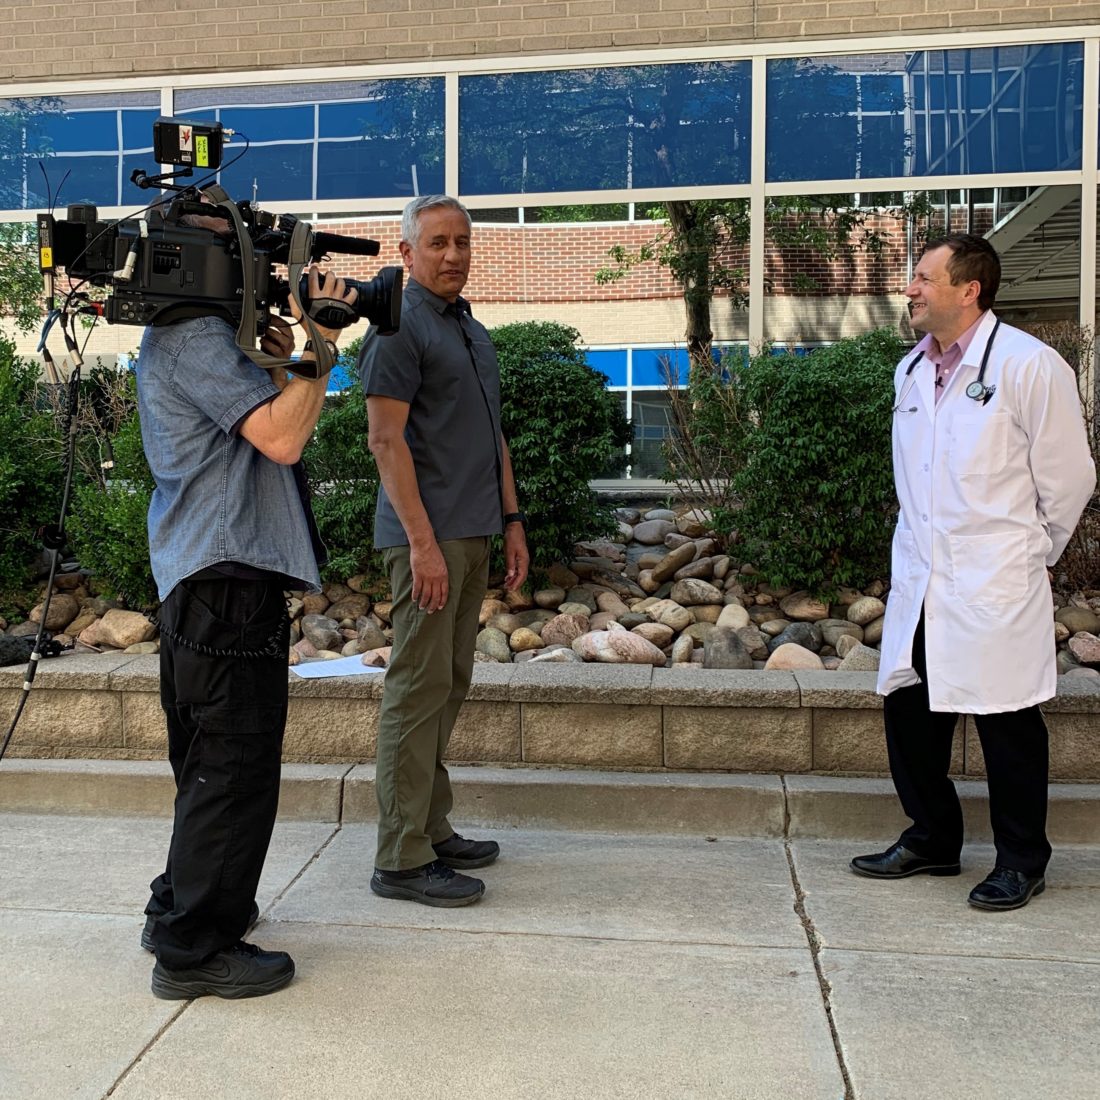 Dr. Scott Joy being interviewed by NBC Nightly News.